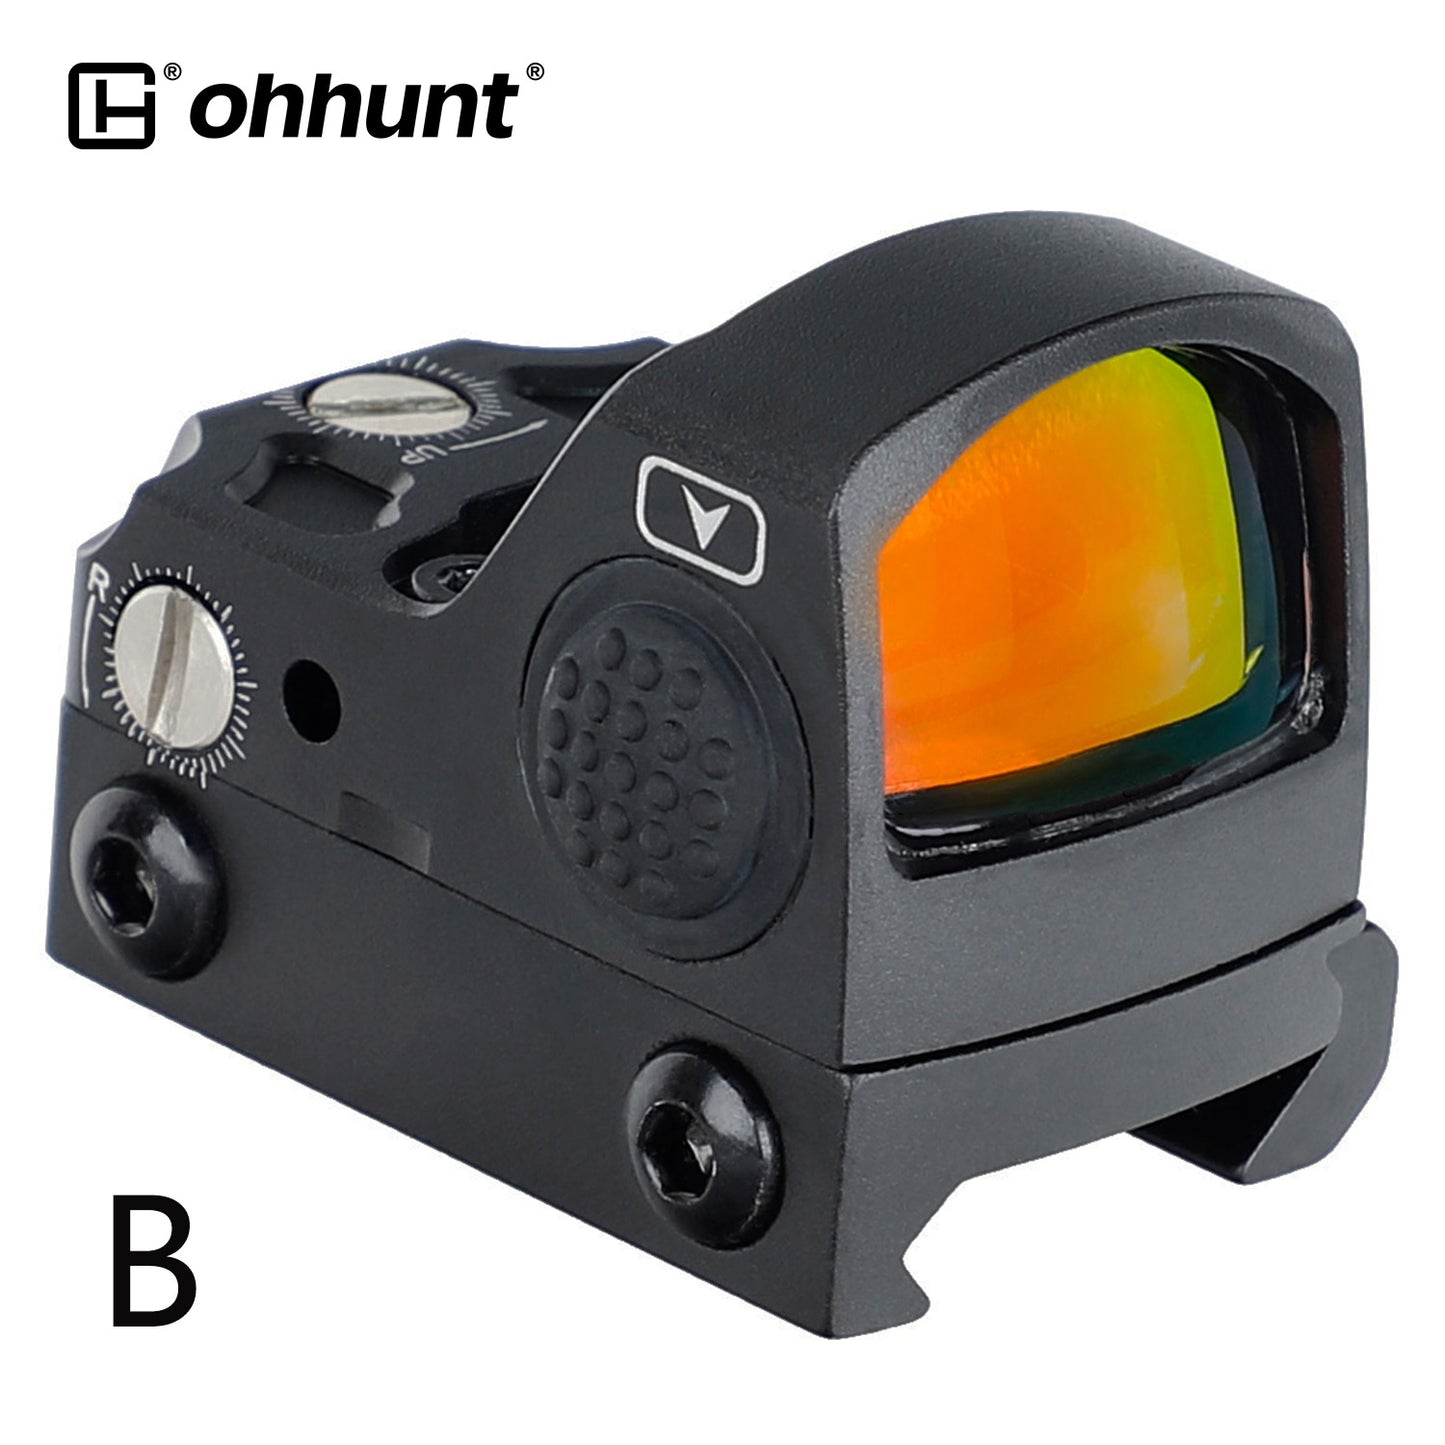 ohhunt® 2 MOA Shake Awake Micro Red Dot Sight - B Model